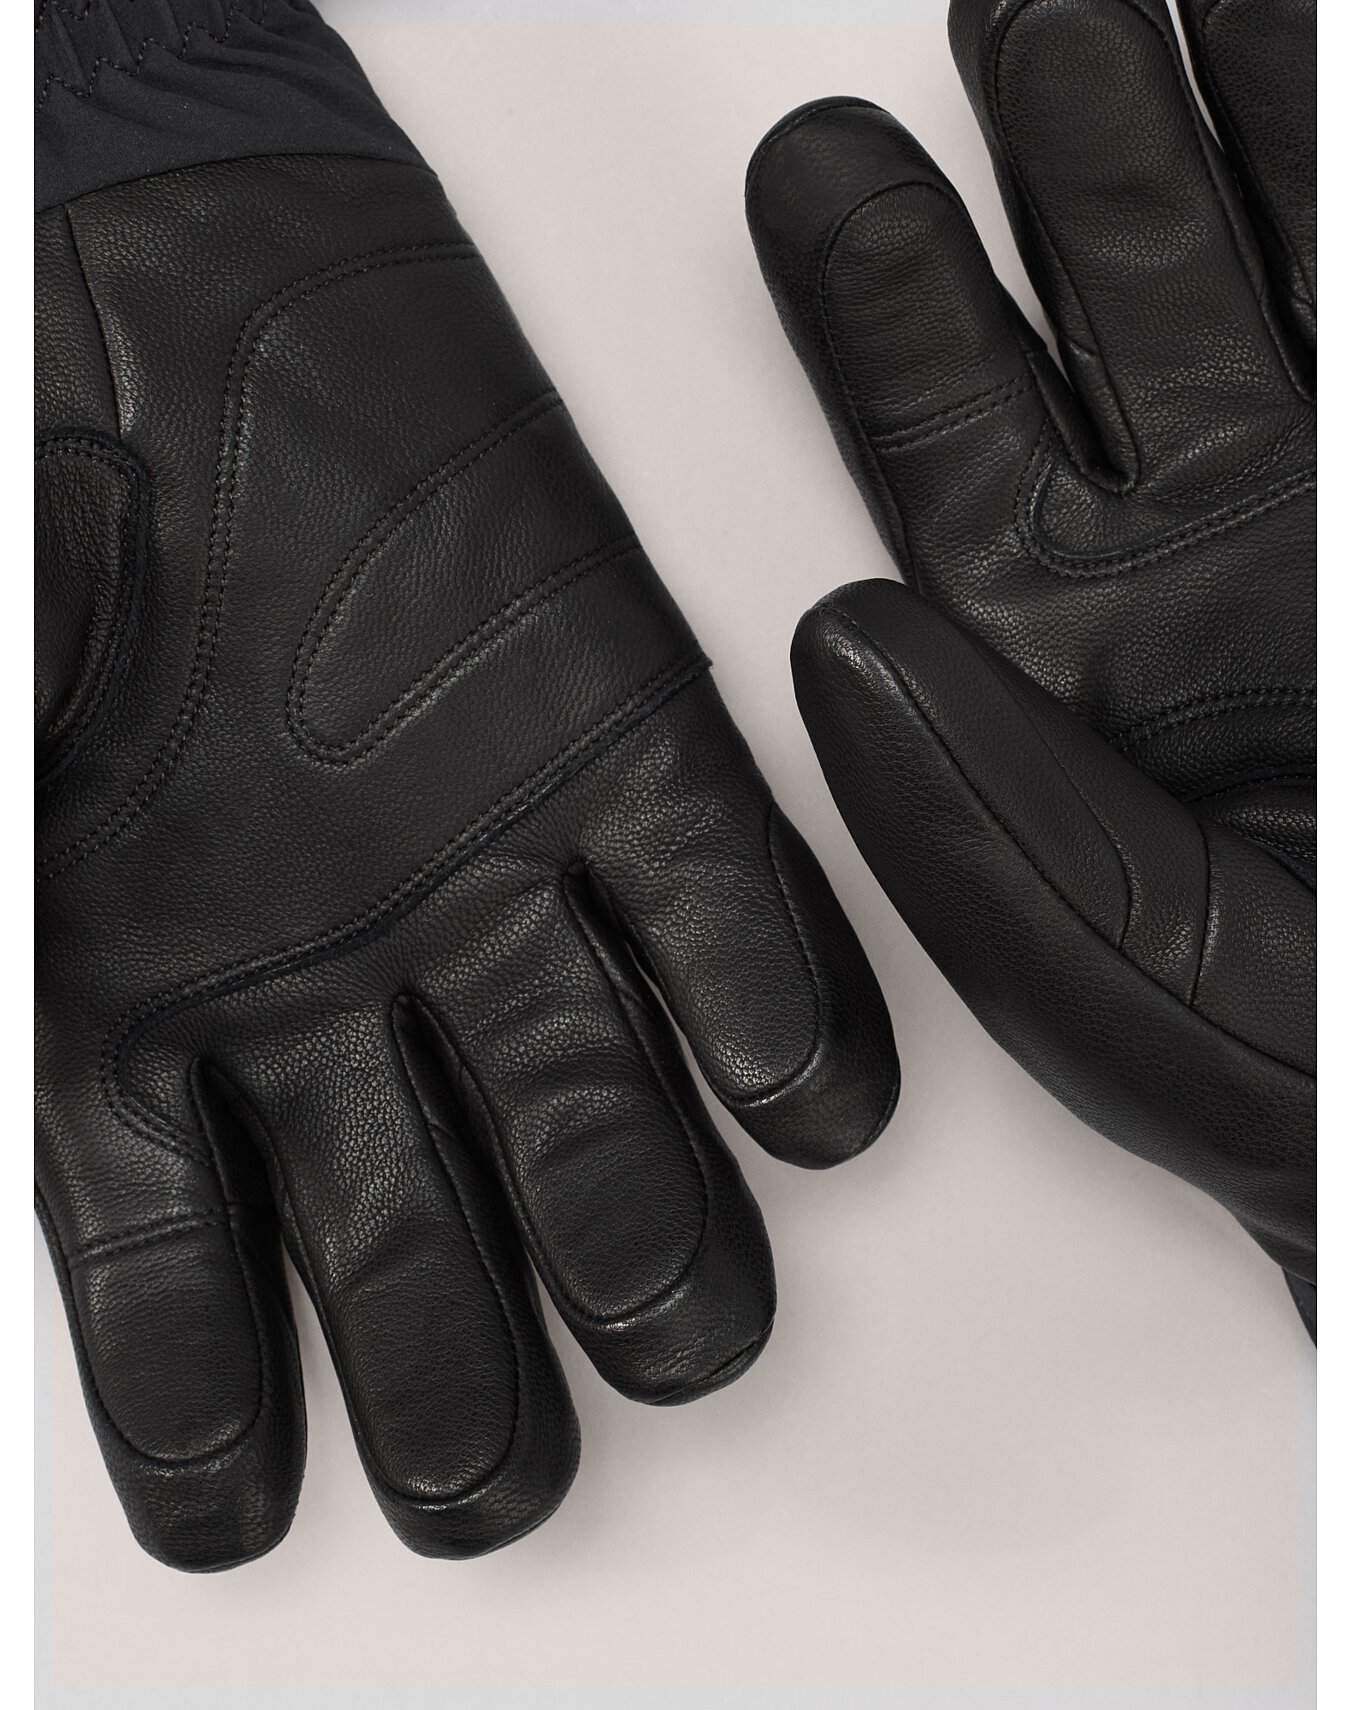 Sabre Glove | Arc'teryx